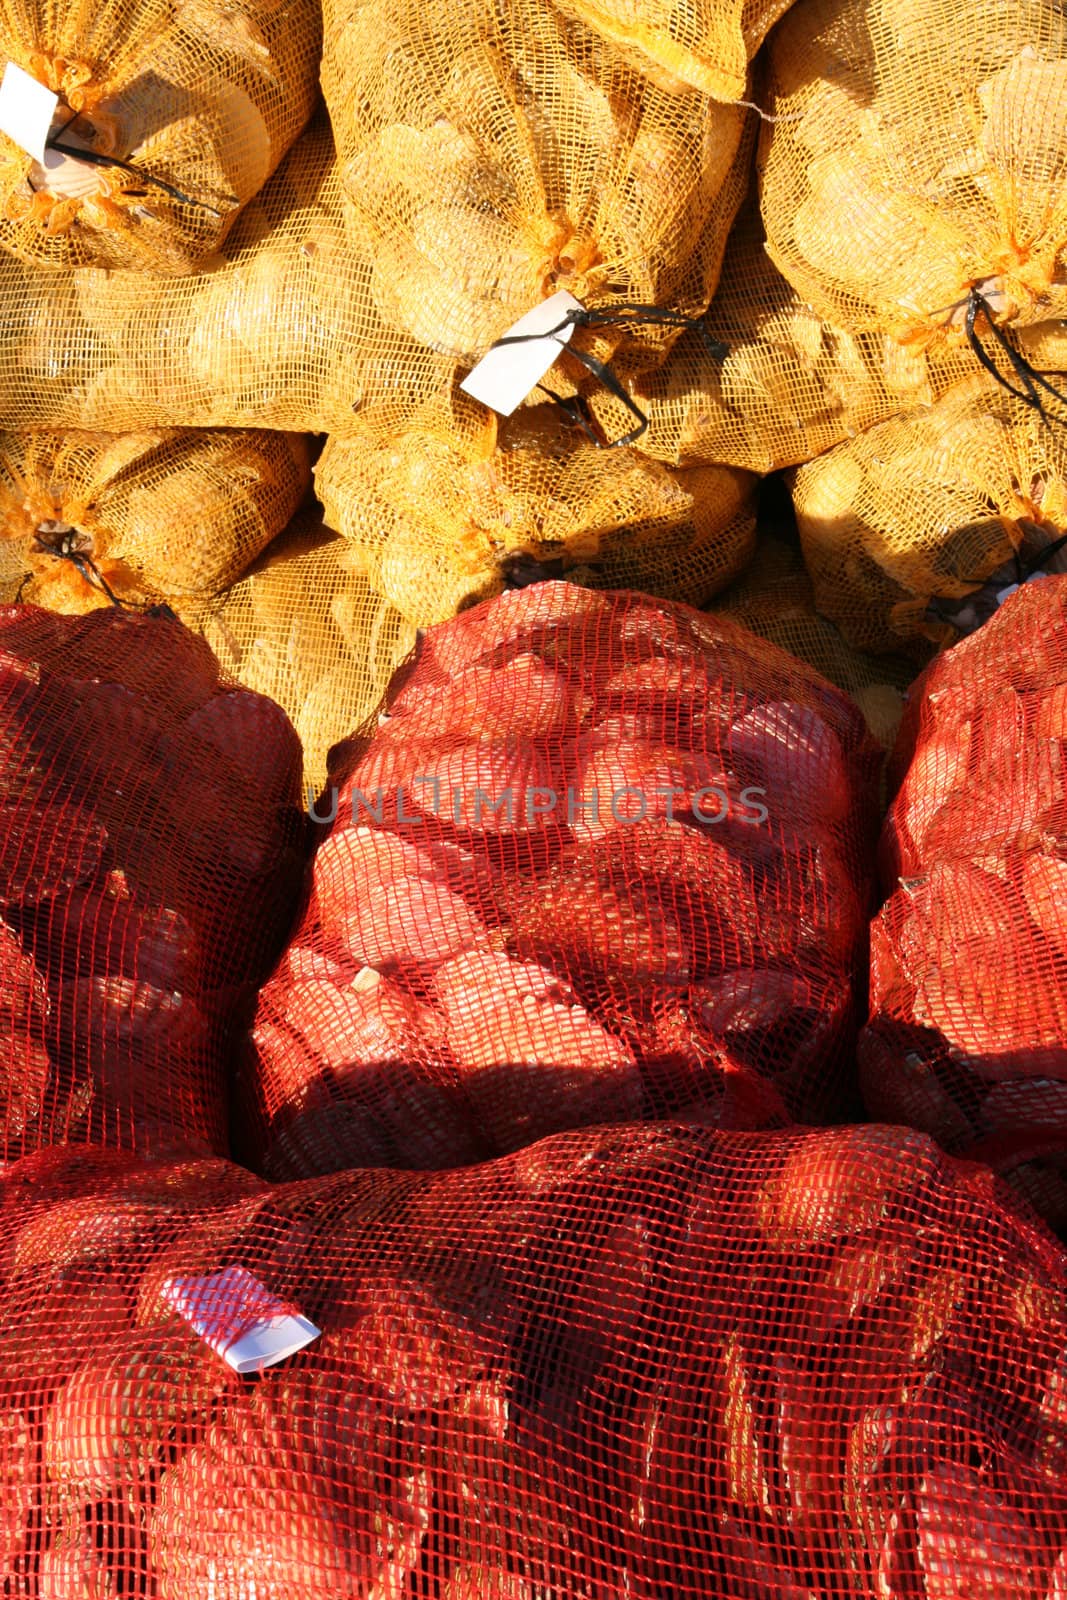 Scallop shells in nets